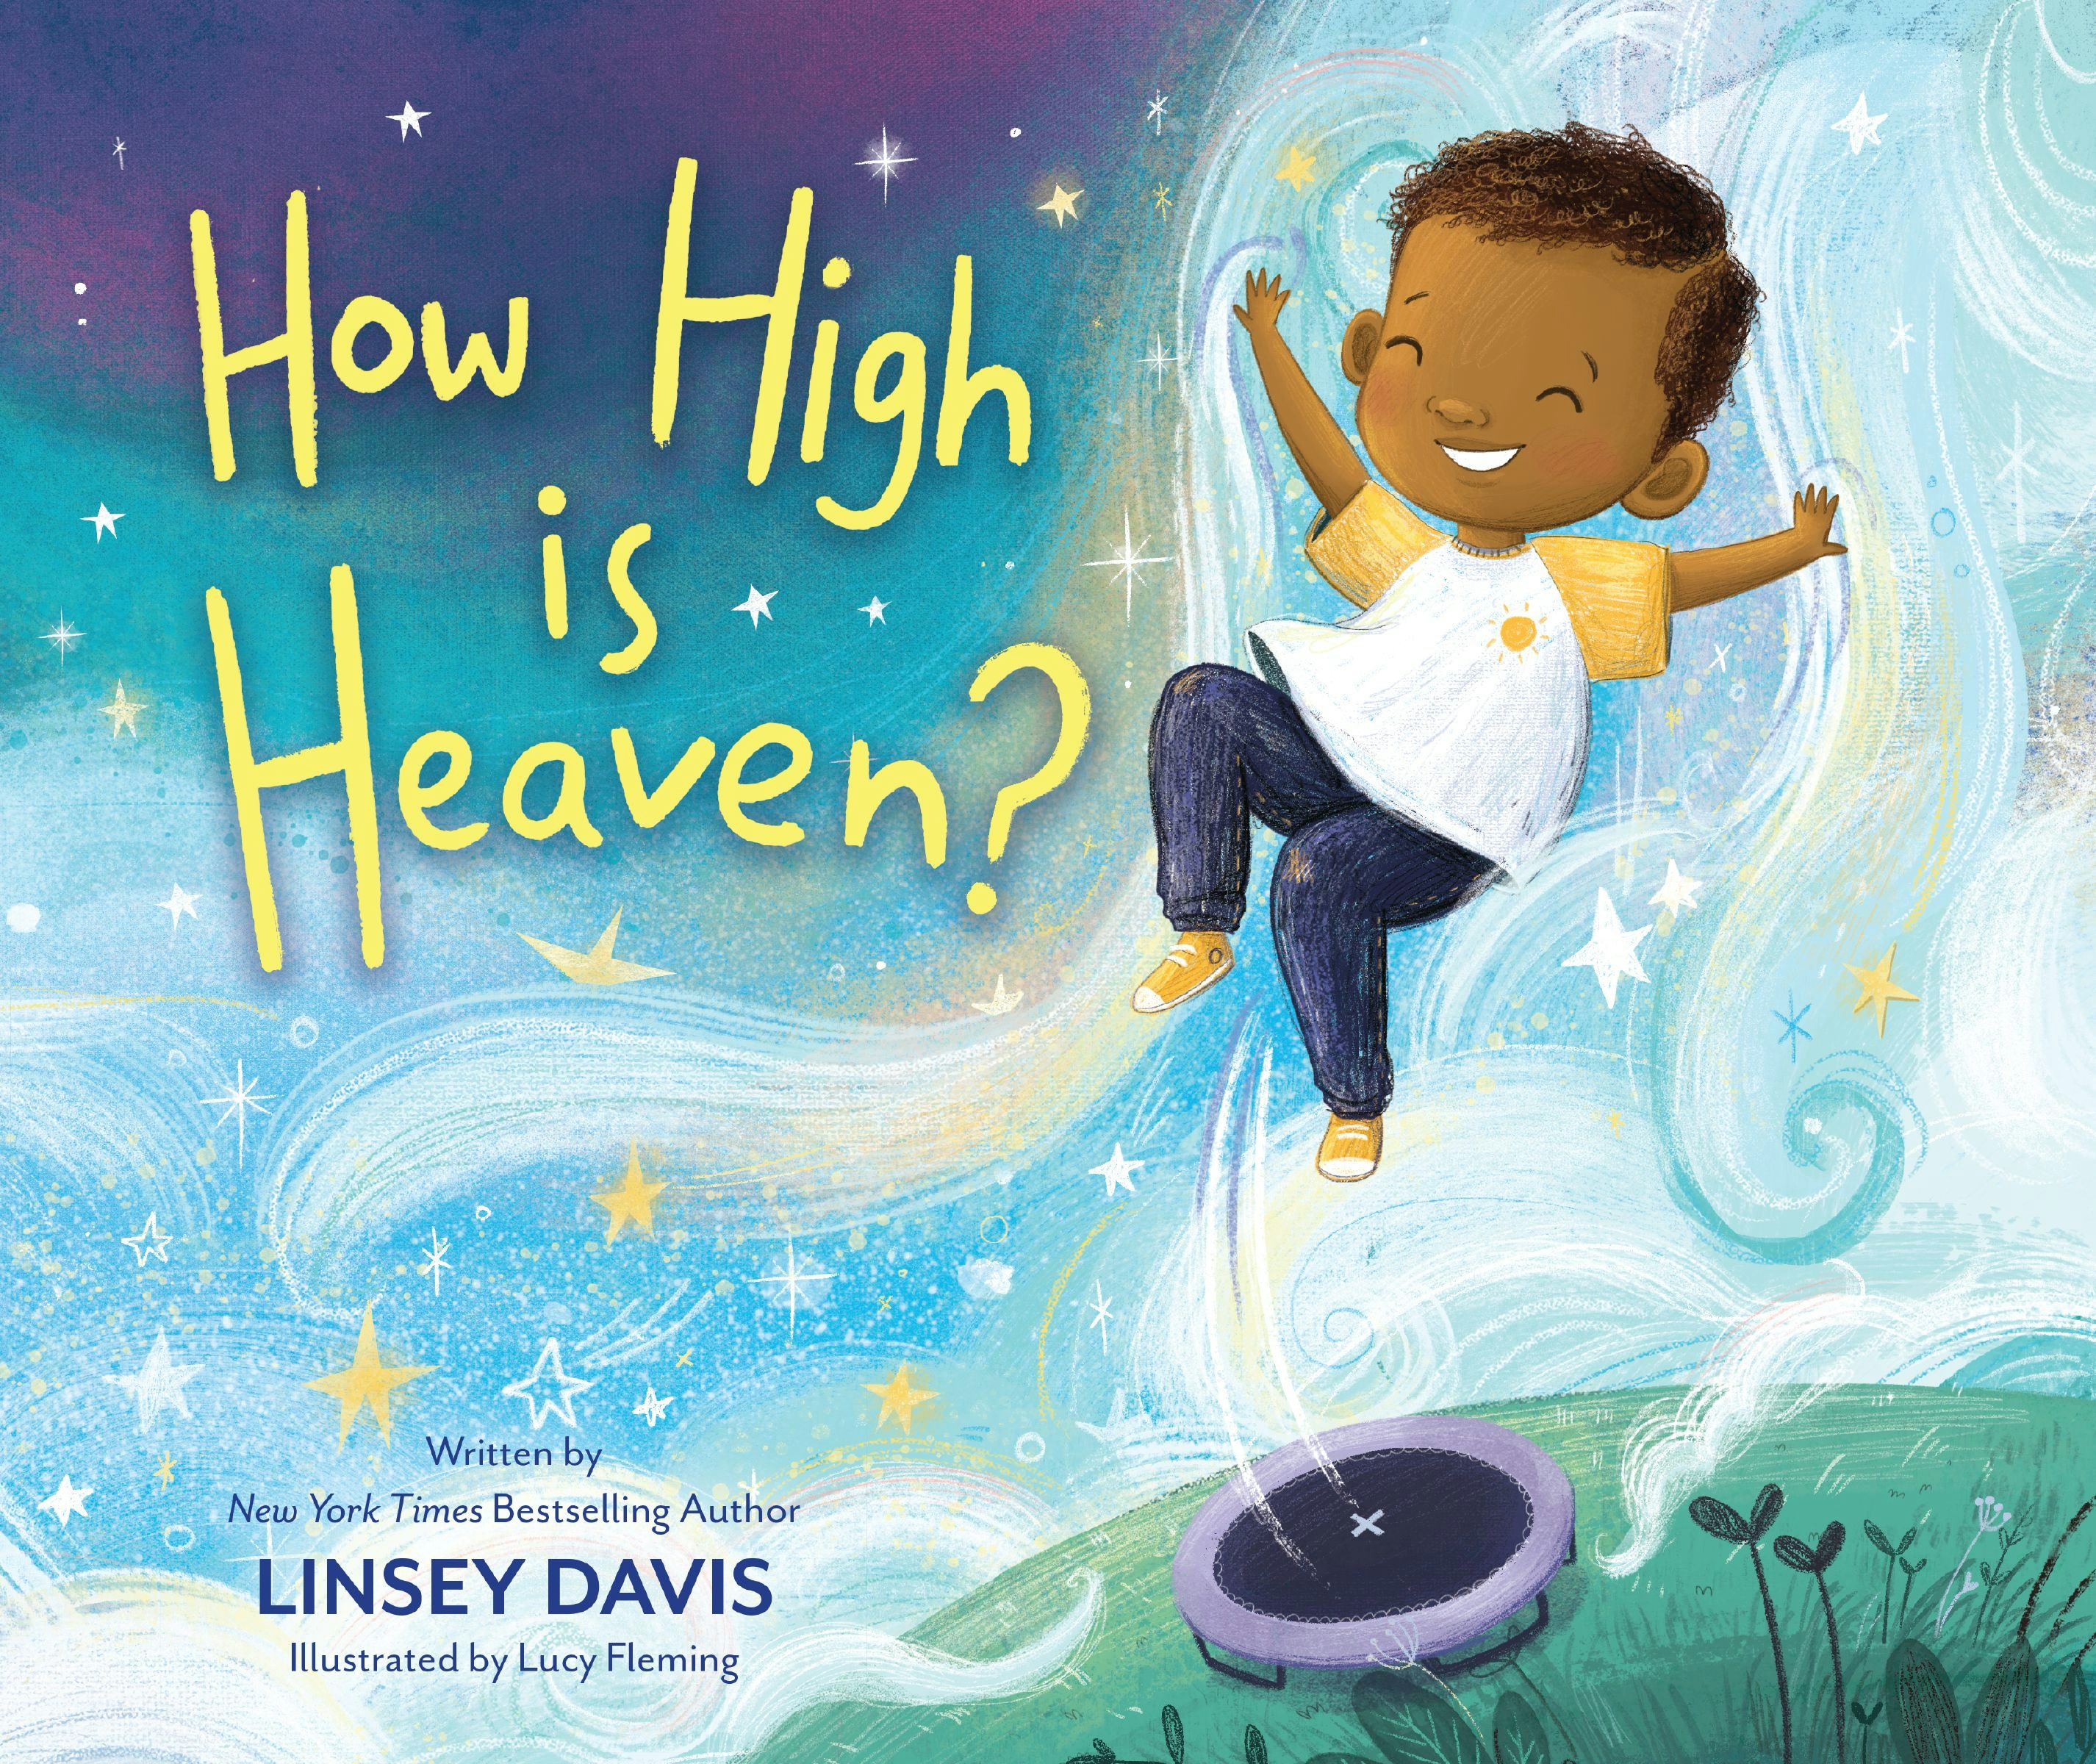 linsey davis book how high is heaven